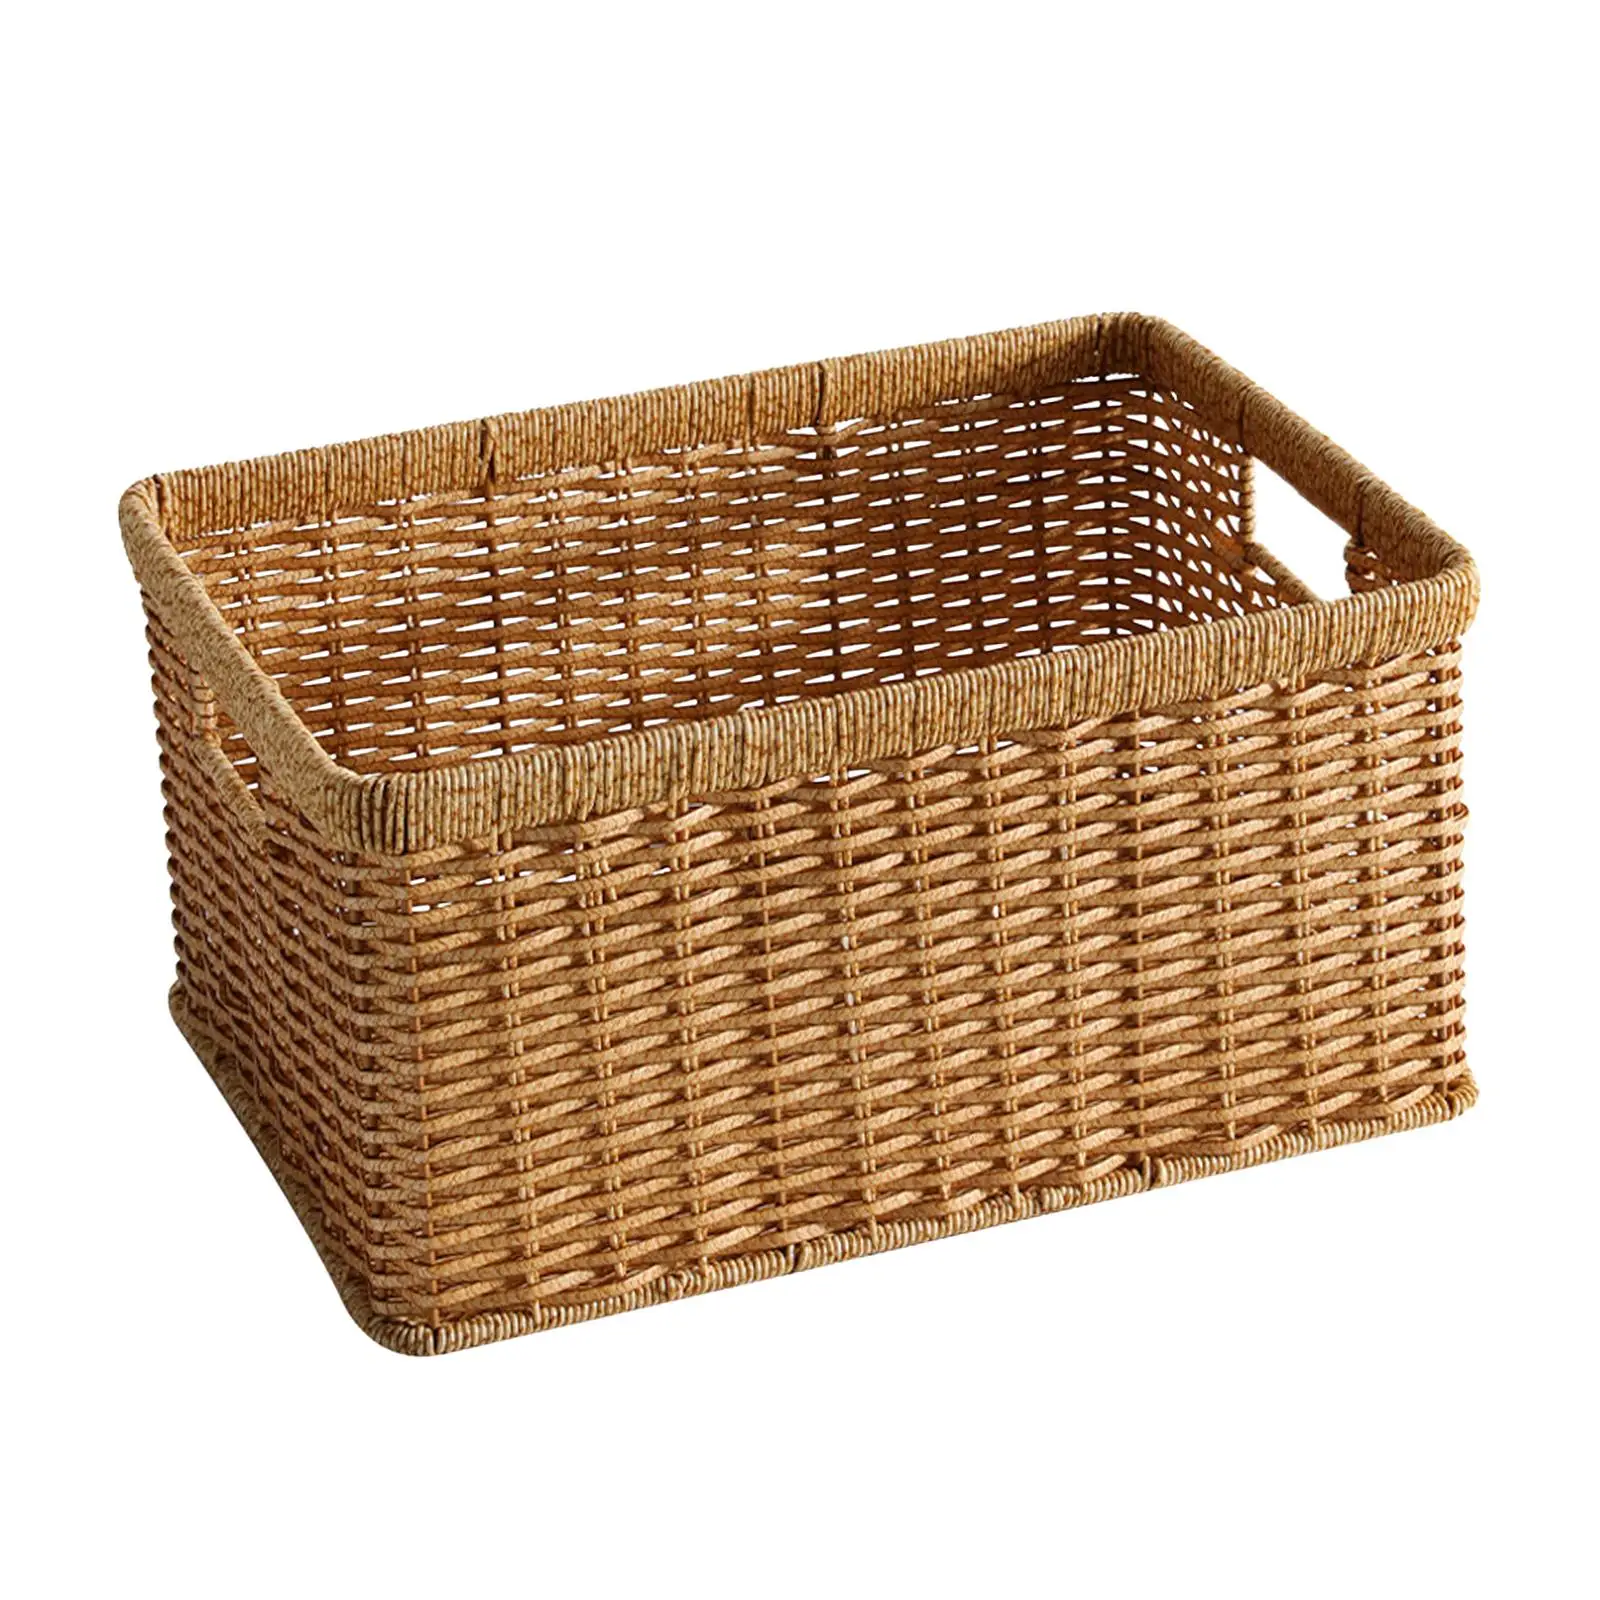 Imitation Ratten Decorative Basket Handmade Basket Rectangle Organizing Sturdy